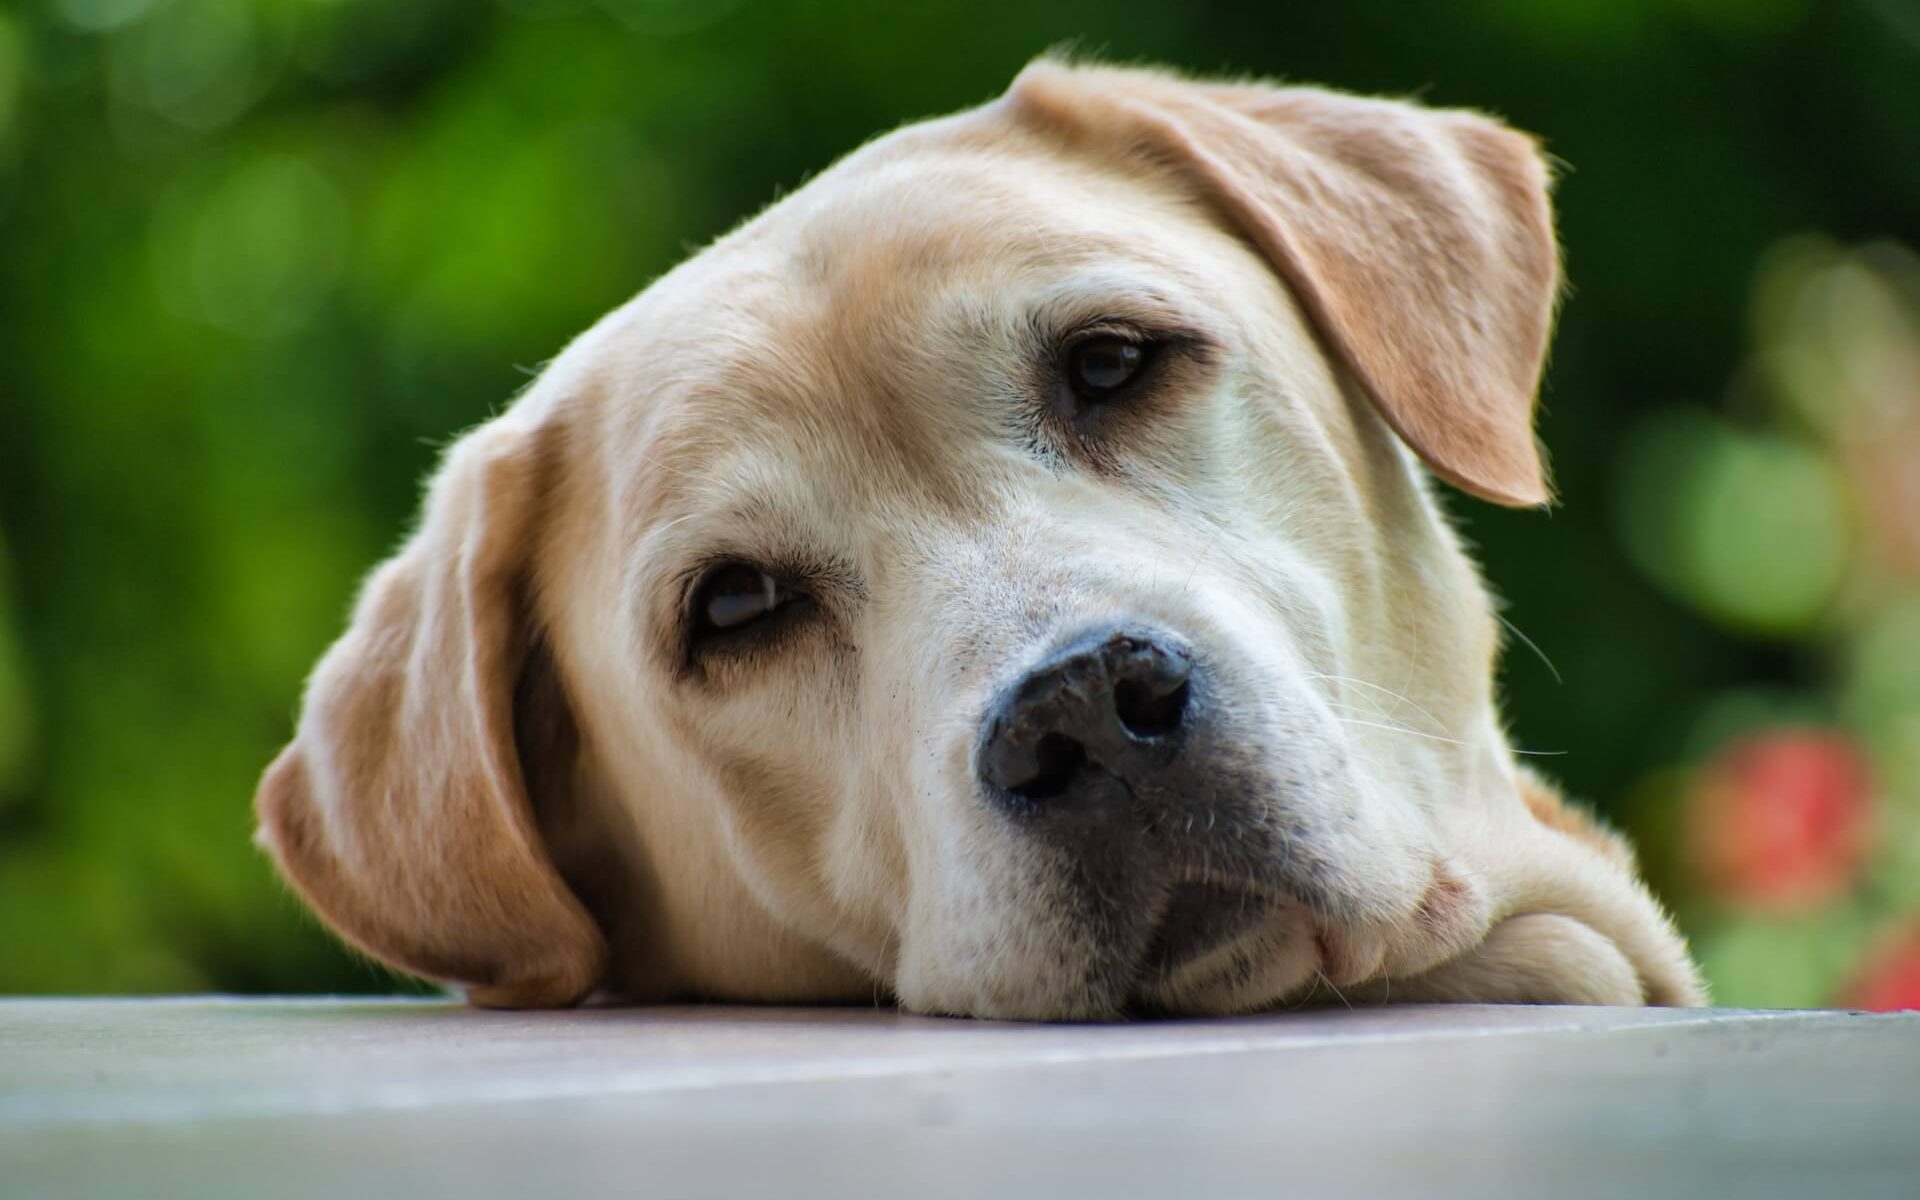 A beautiful Labrador dog posing gracefully